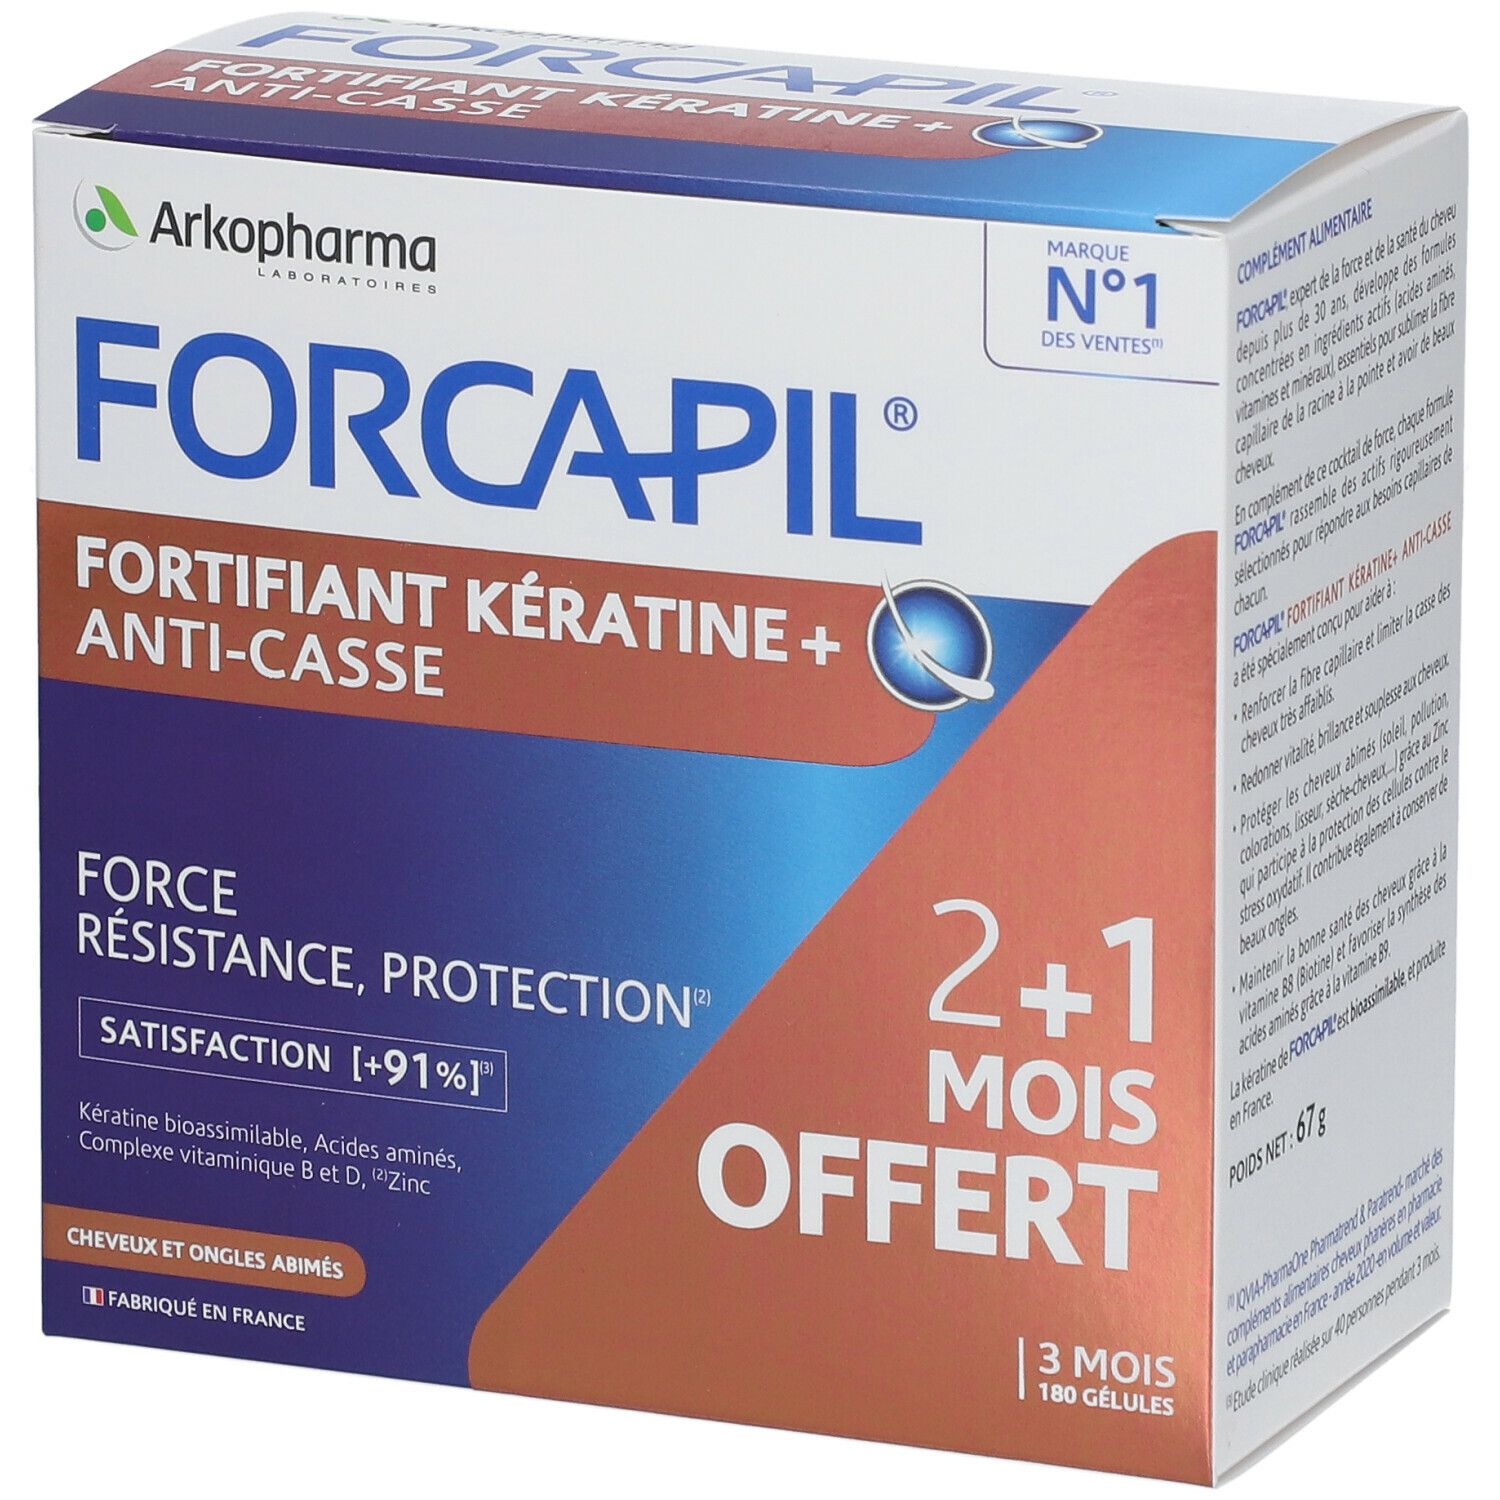 Arkopharma Forcapil® Kératine +